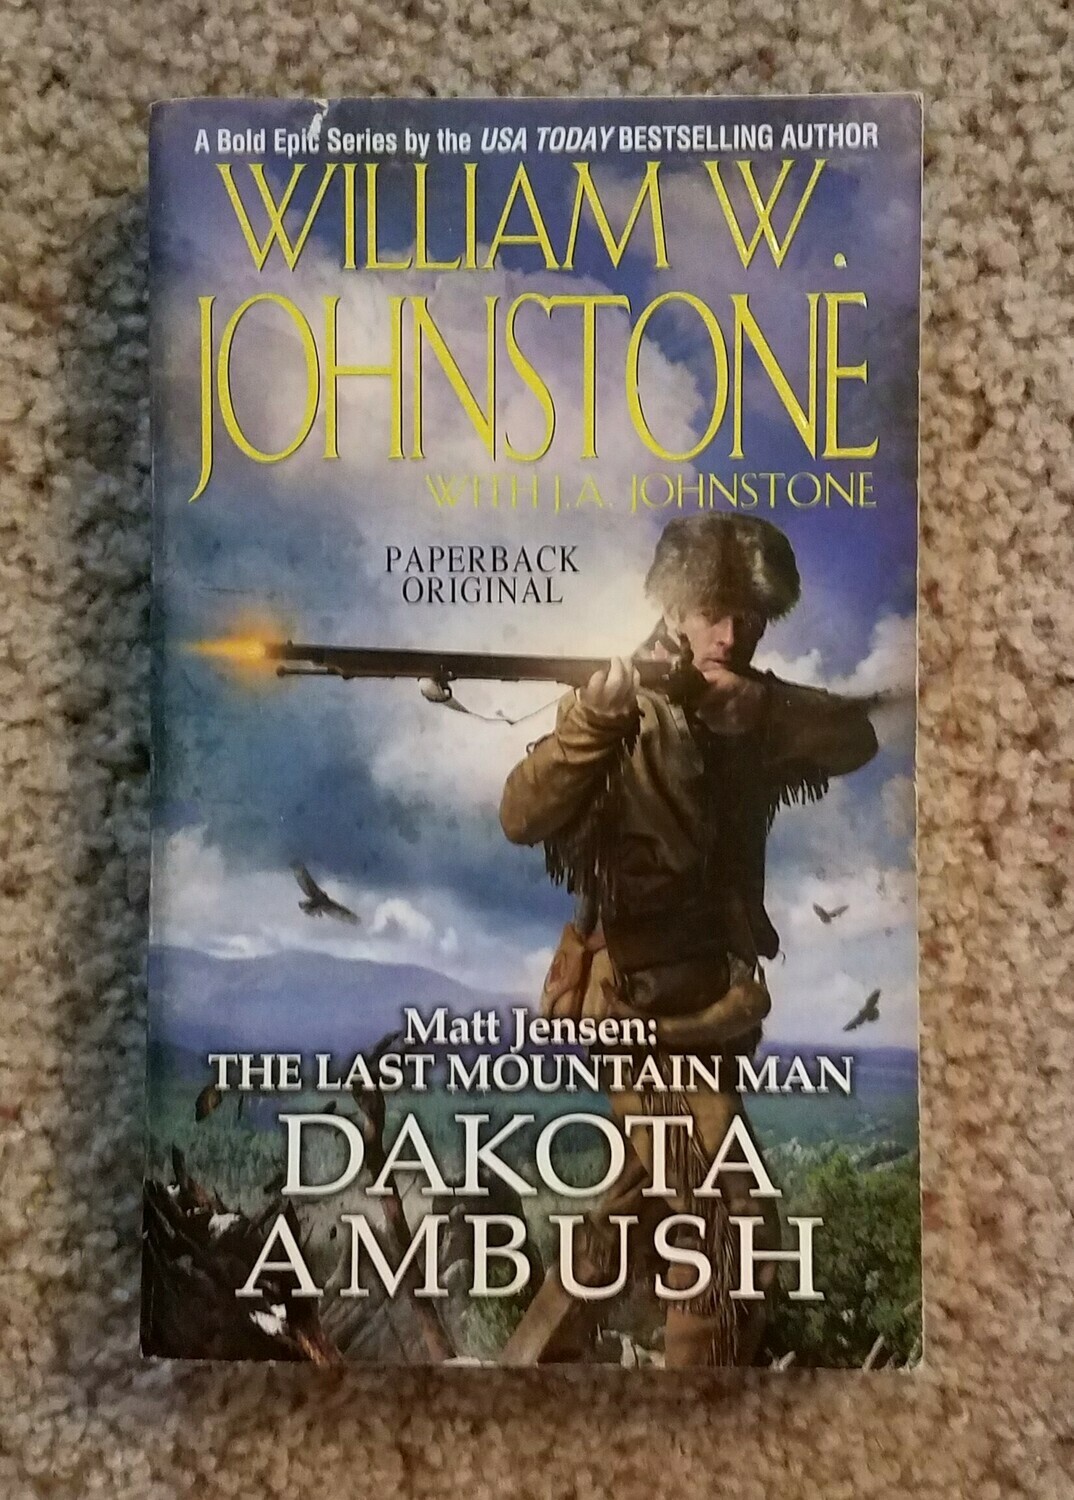 Matt Jensen: The Last Mountain Man - Dakota Ambush by William W. Johnston with J.A Johnstone